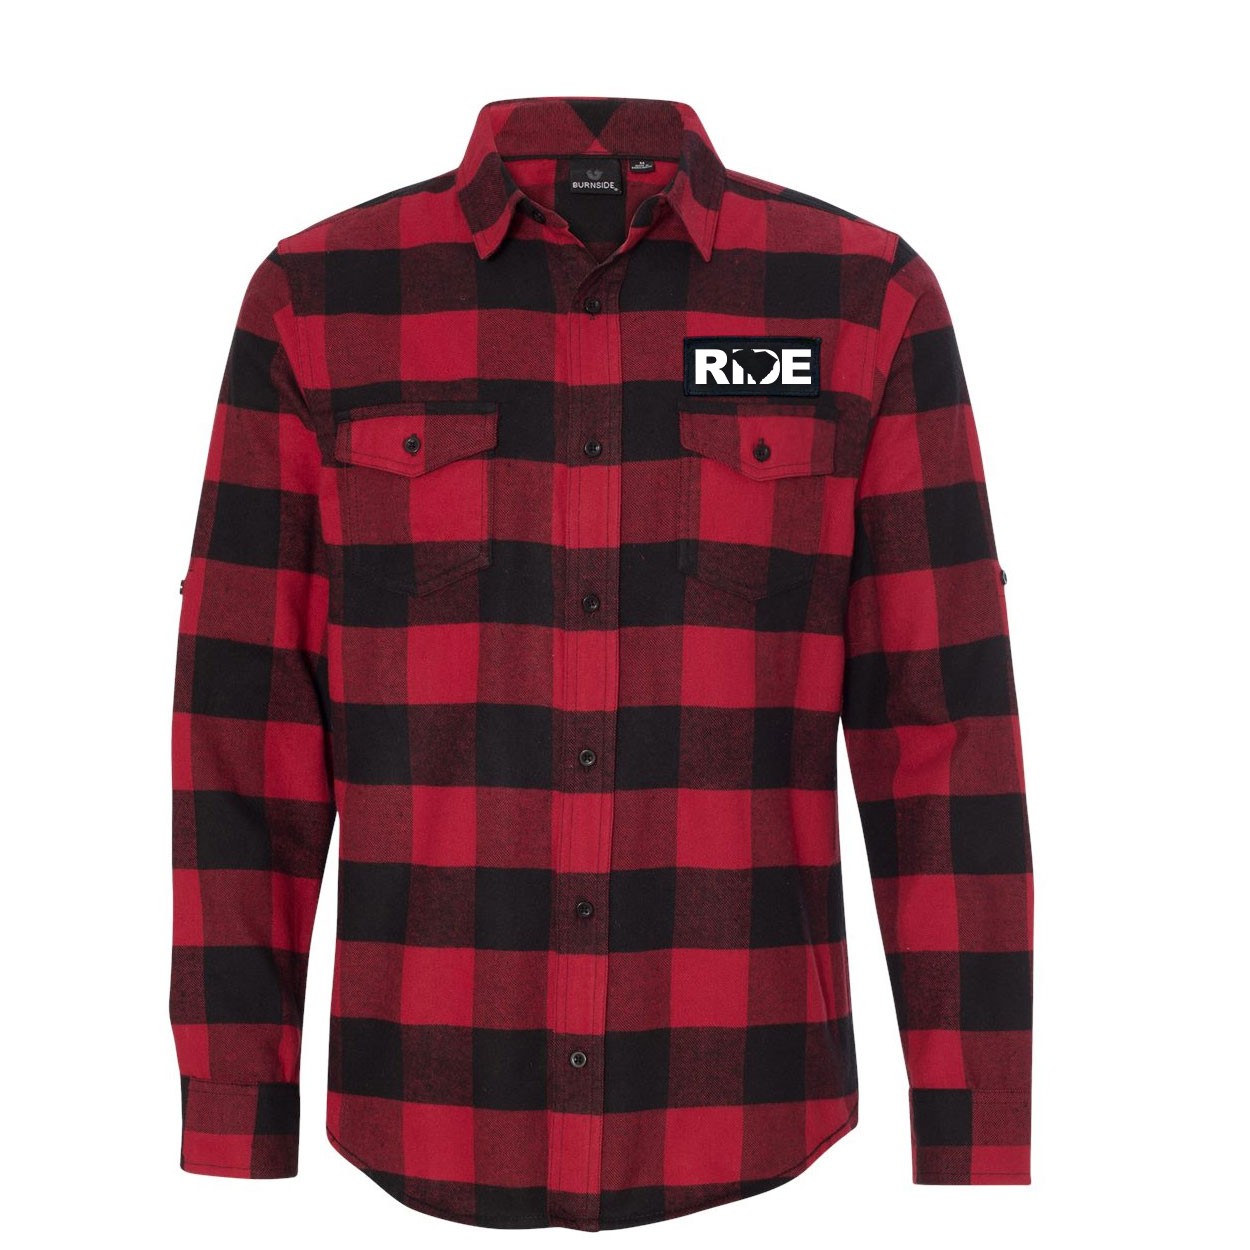 Ride South Carolina Classic Unisex Long Sleeve Woven Patch Flannel Shirt Red/Black Buffalo (White Logo)